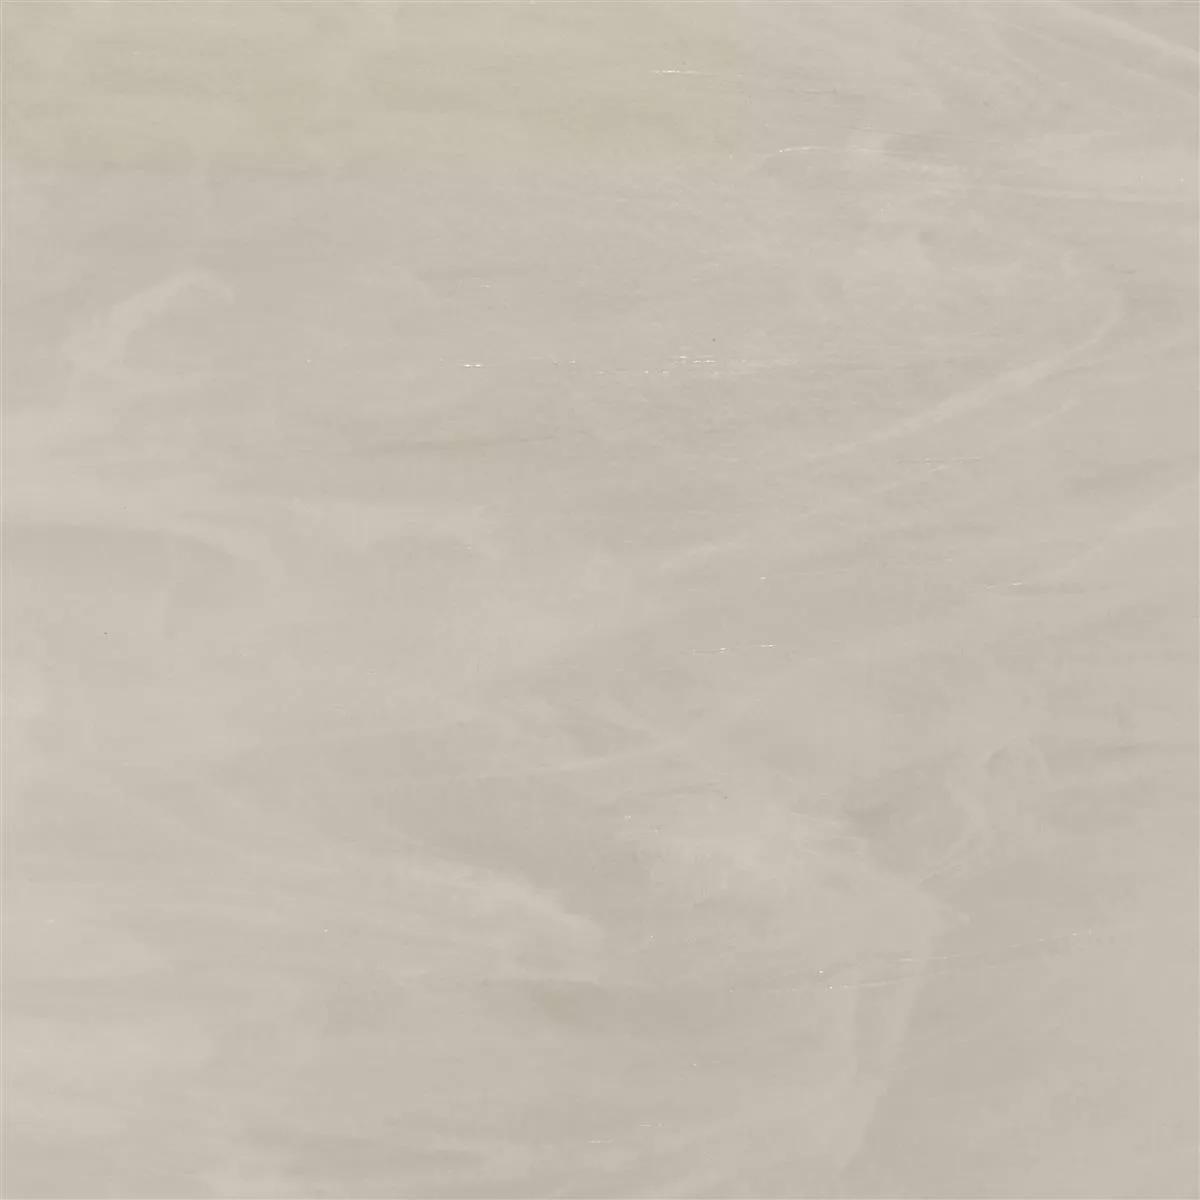 Staklo Zidne Pločice Trend-Vi Supreme Ivory 30x60cm